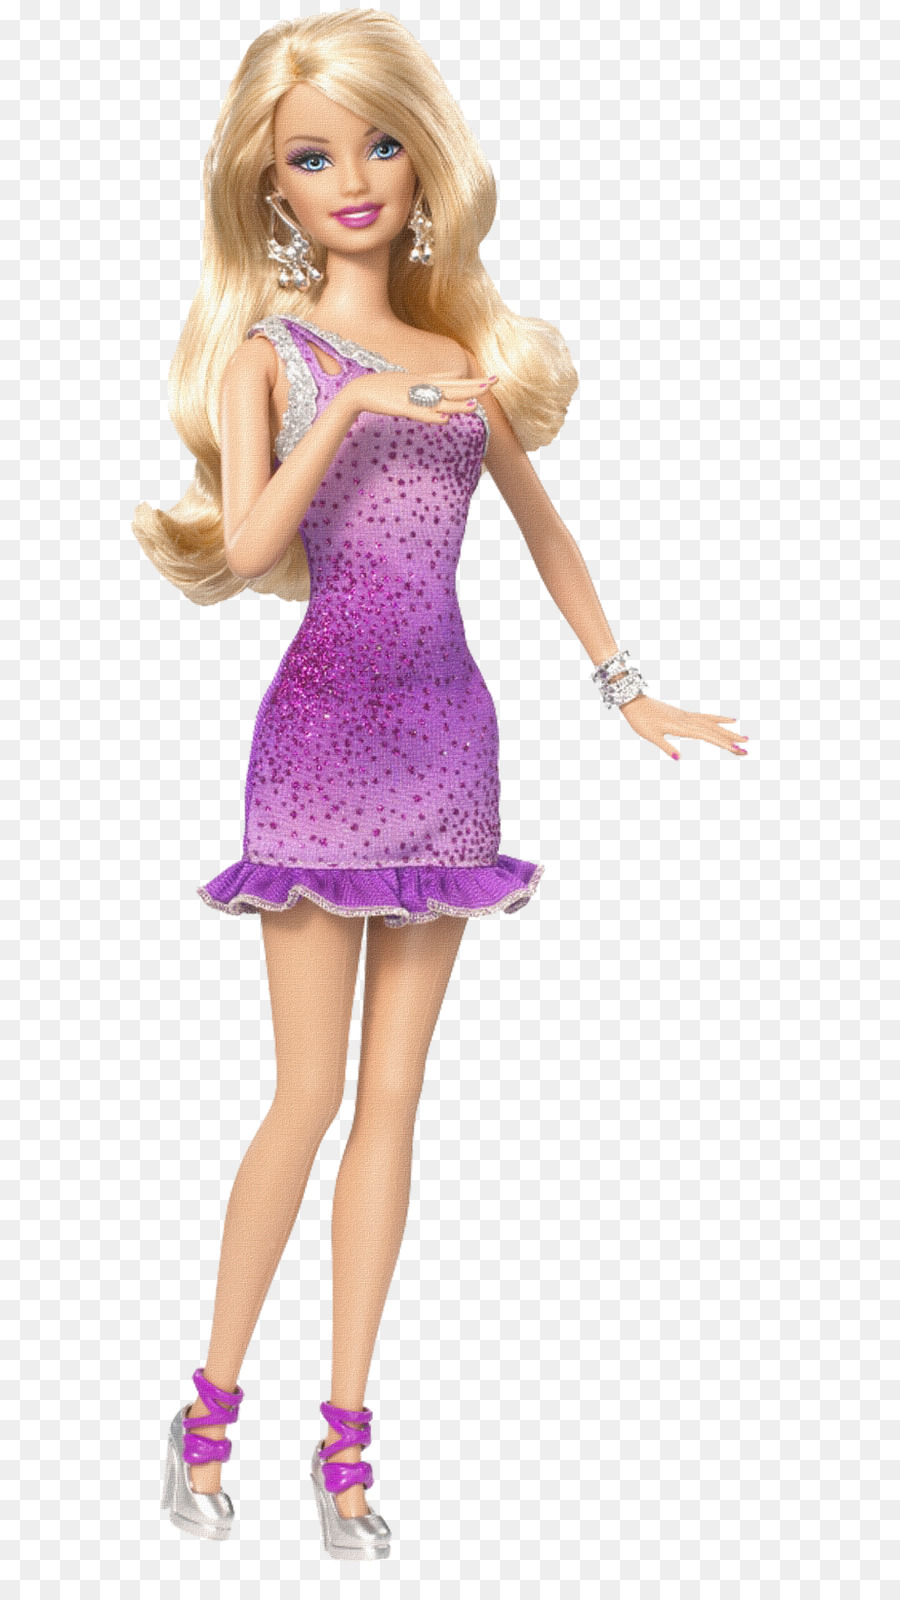 Barbie clipart transparent. Cartoon doll clip art